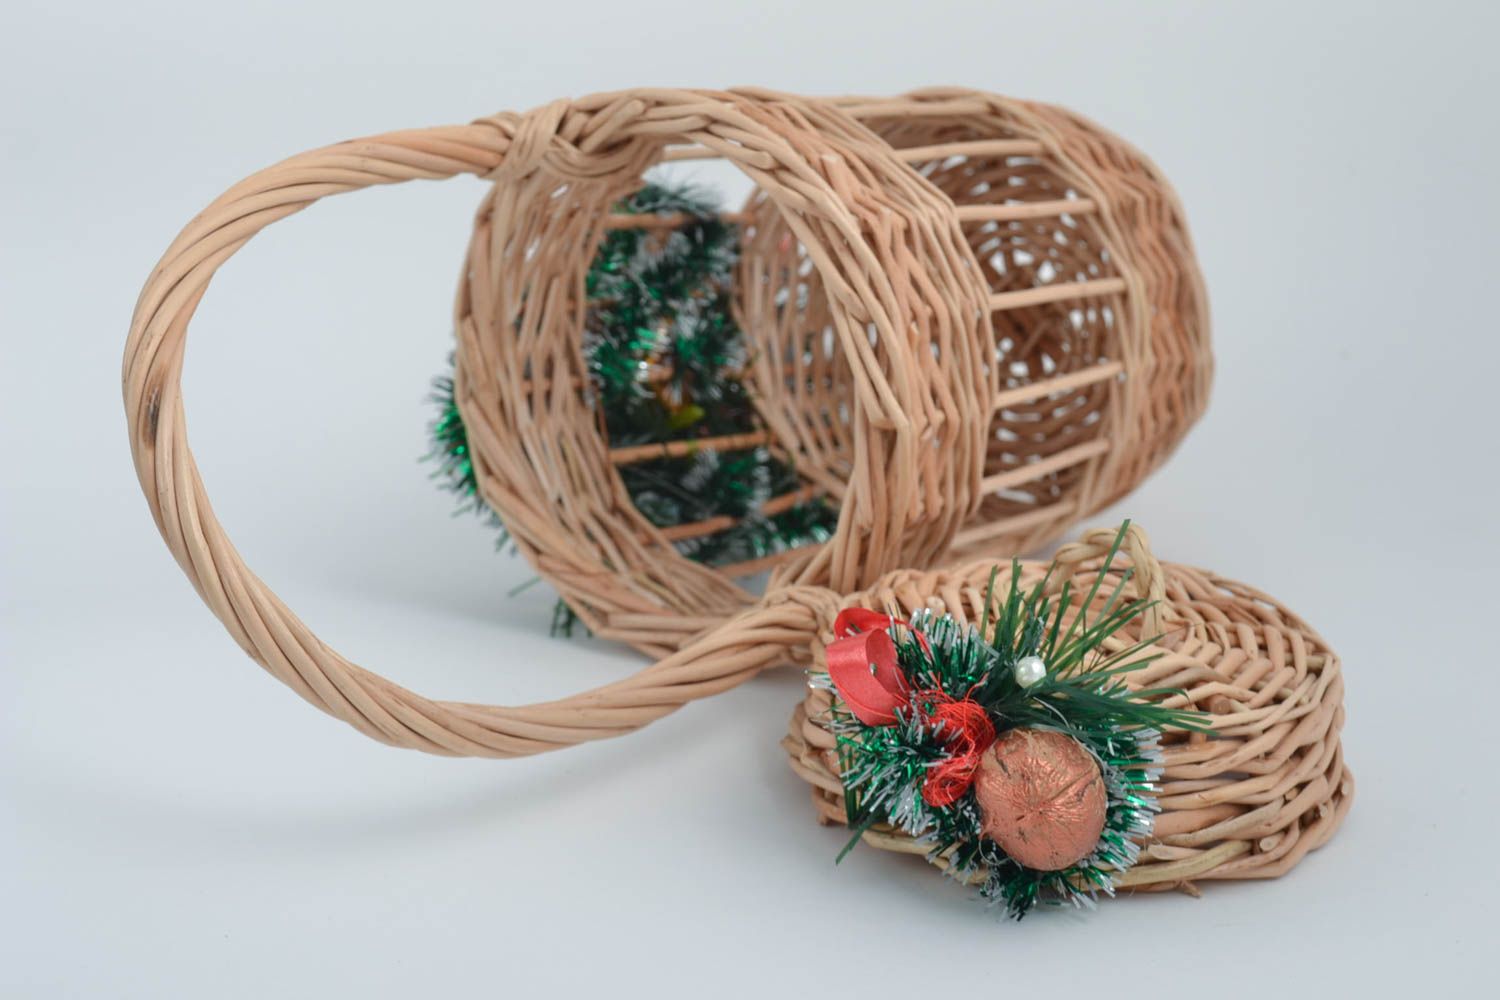 Unusual handmade woven basket Easter basket ideas designer accessories photo 4